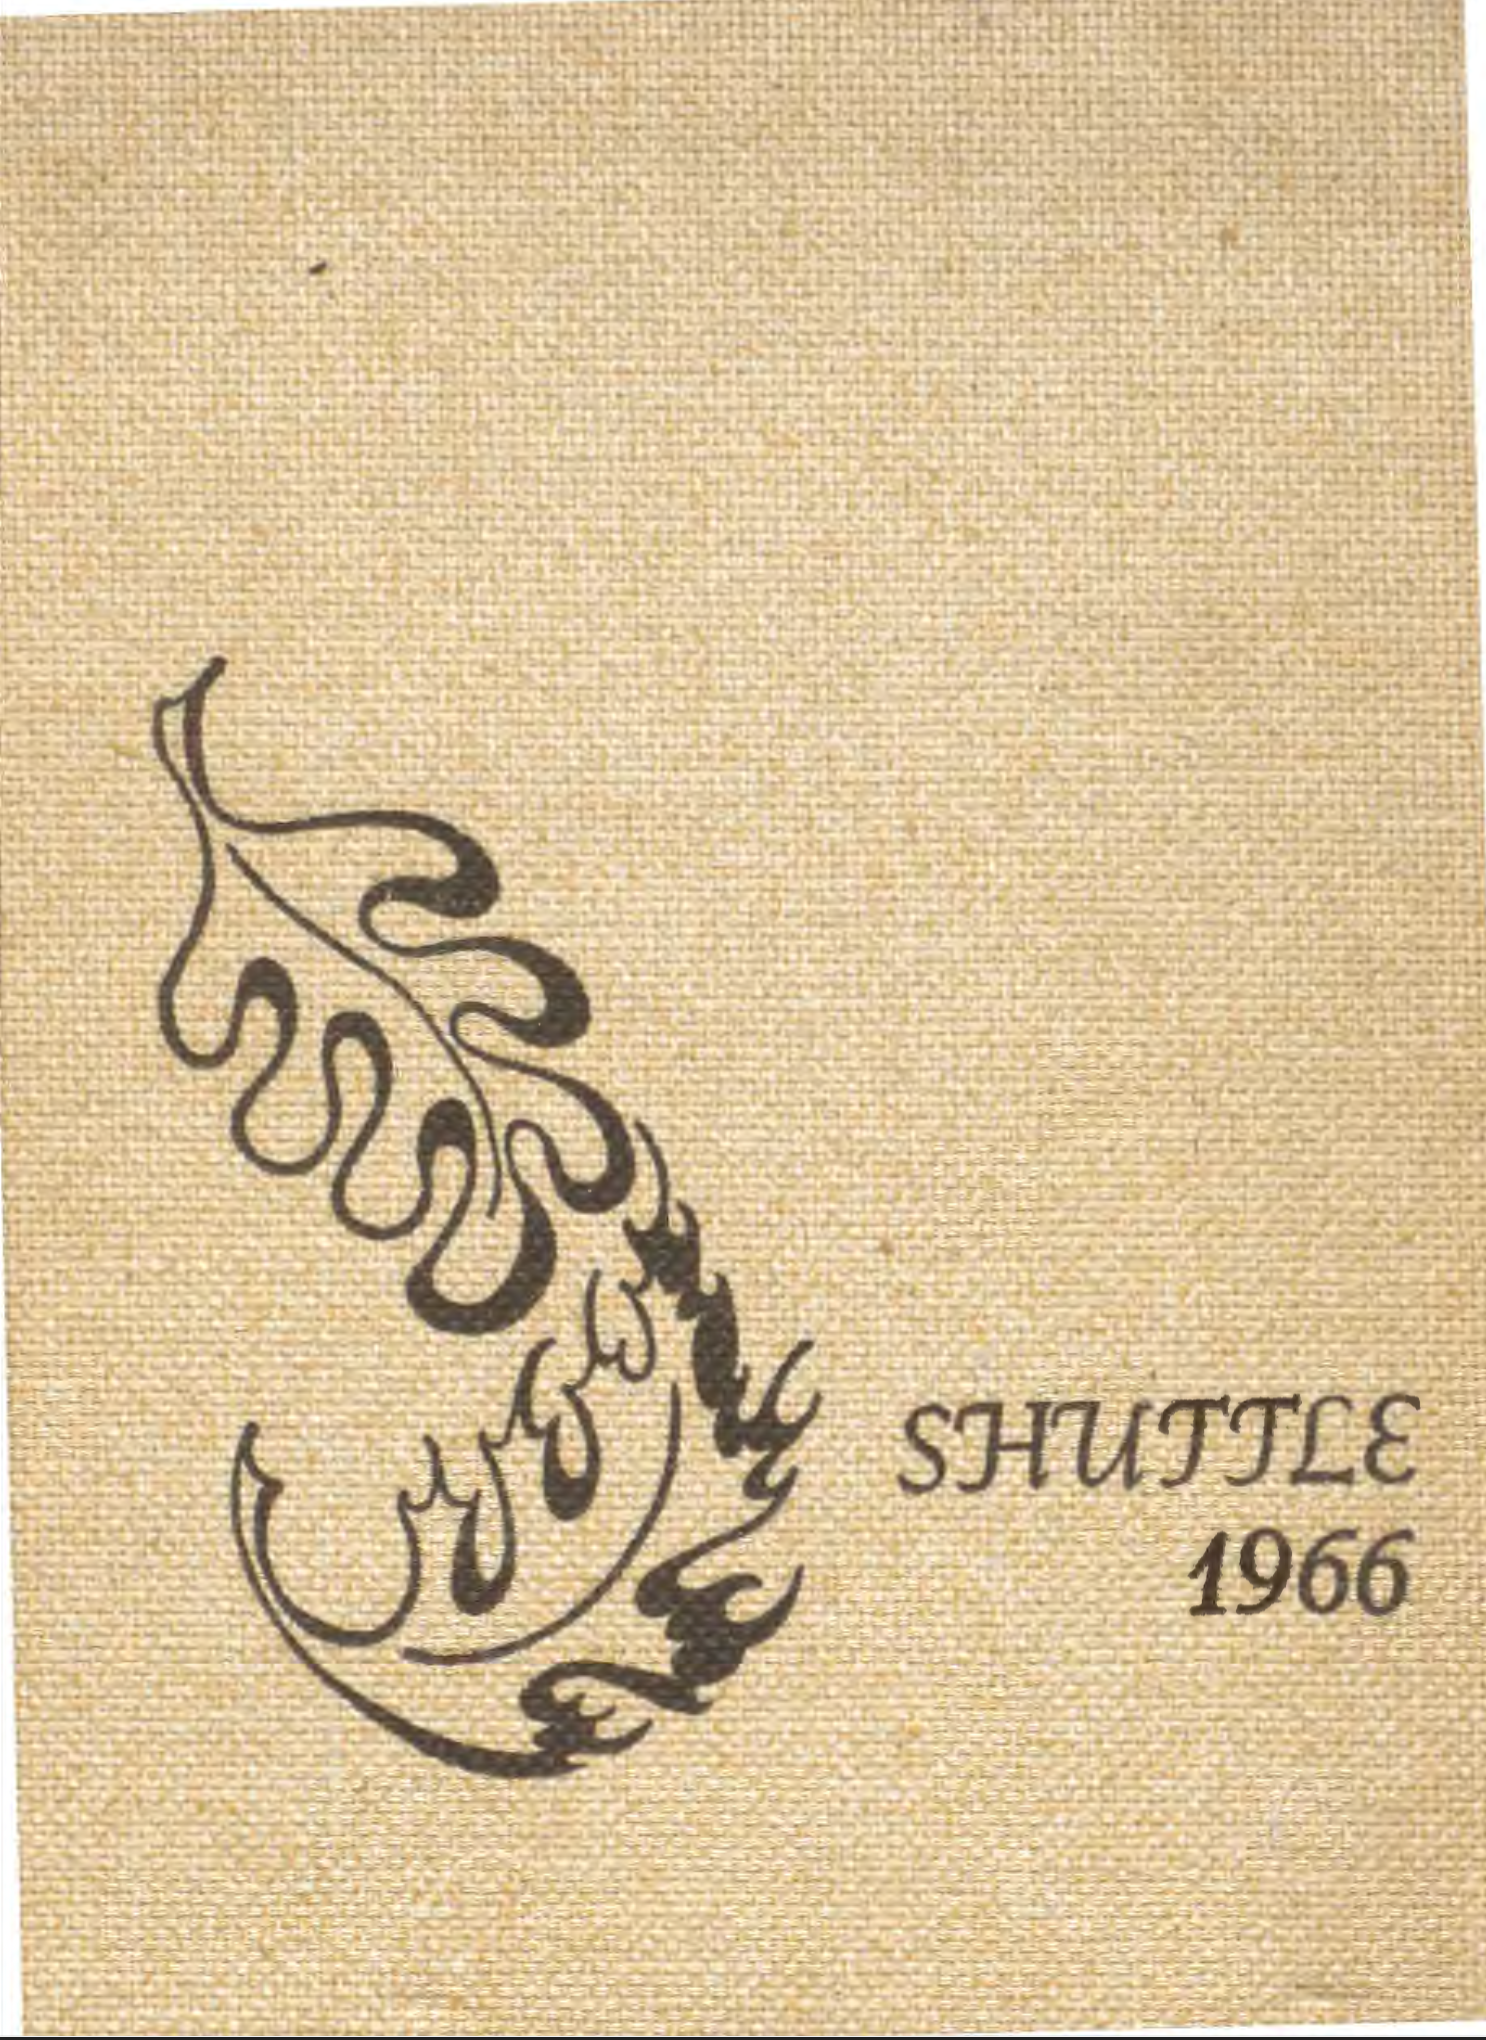 Shuttle Shaw High School Yearbook 1966